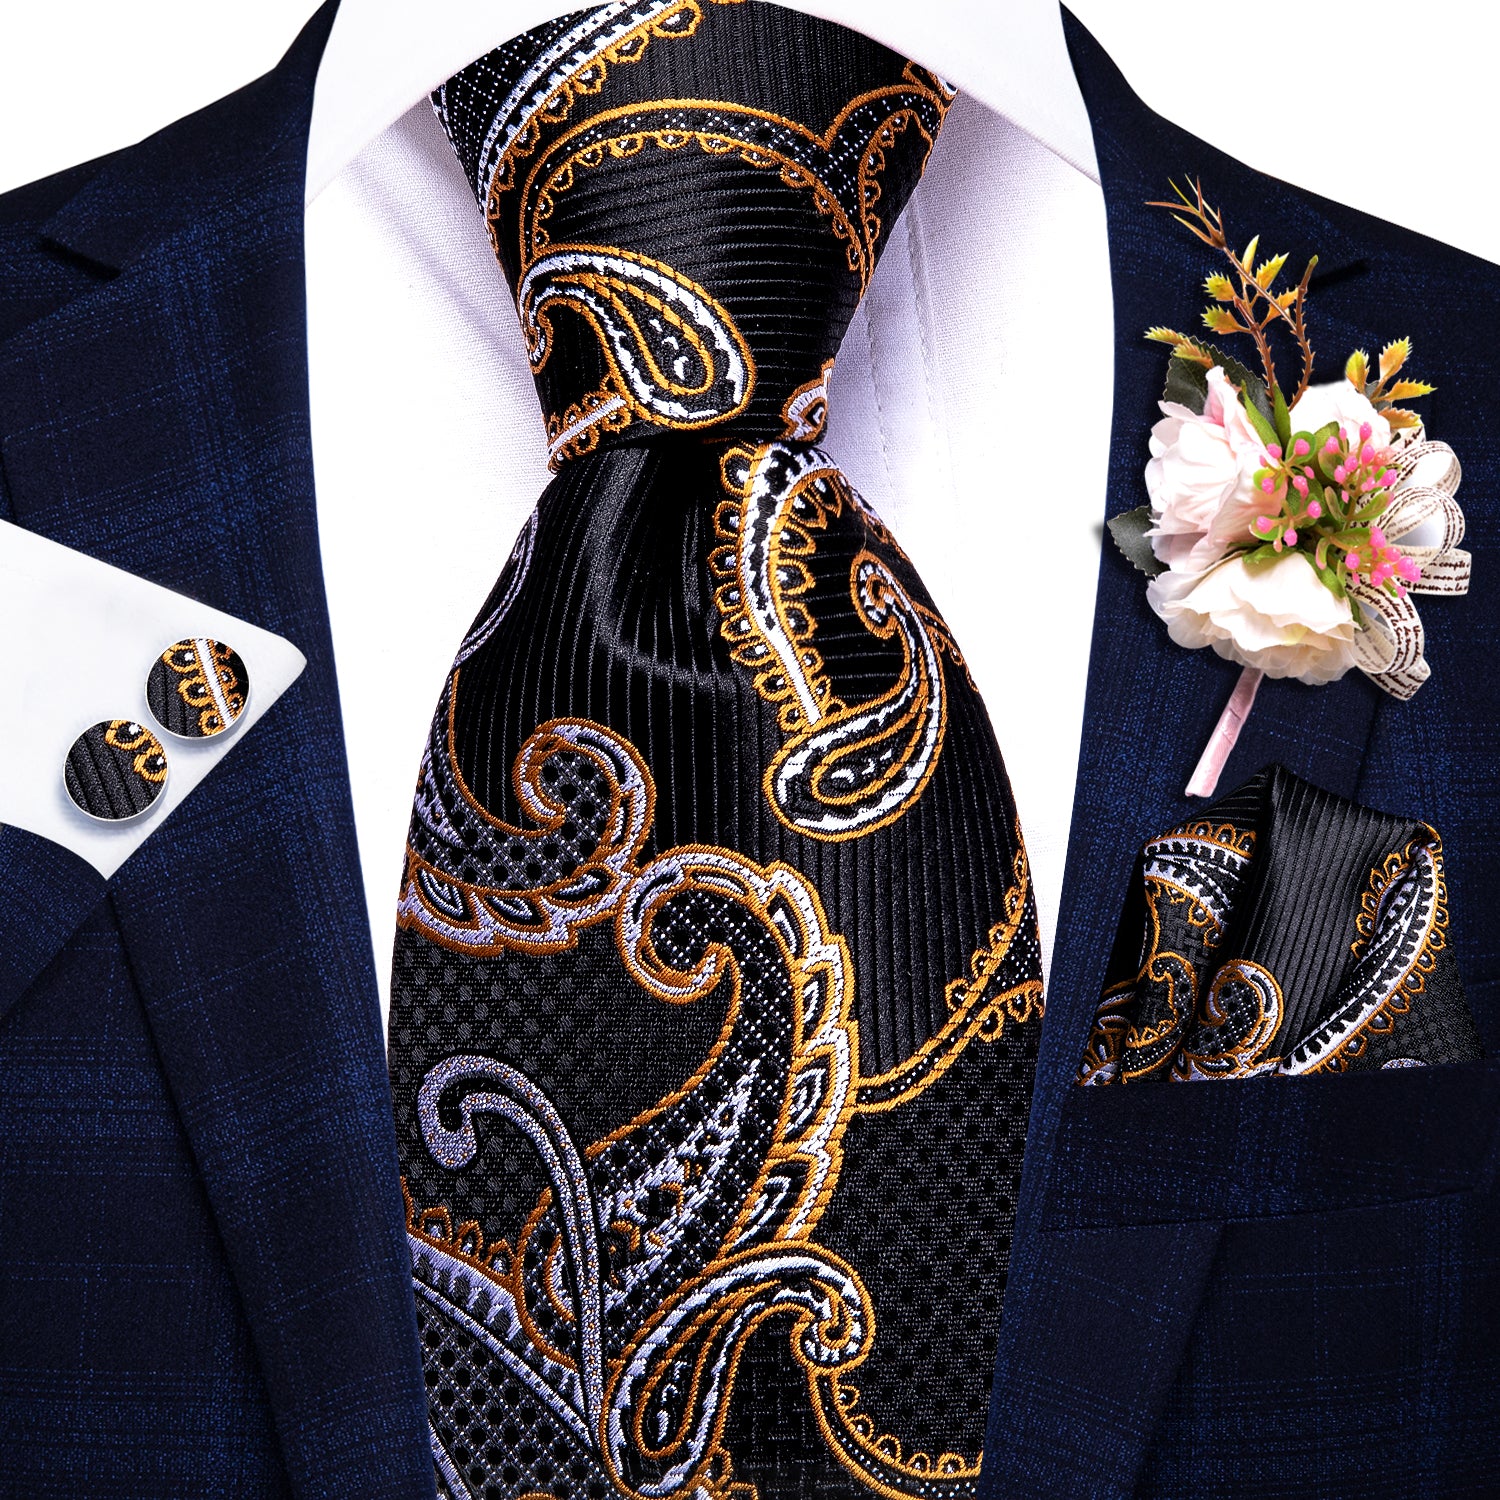 Black Golden Paisley Tie Handkerchief Cufflinks Set with Wedding Brooch